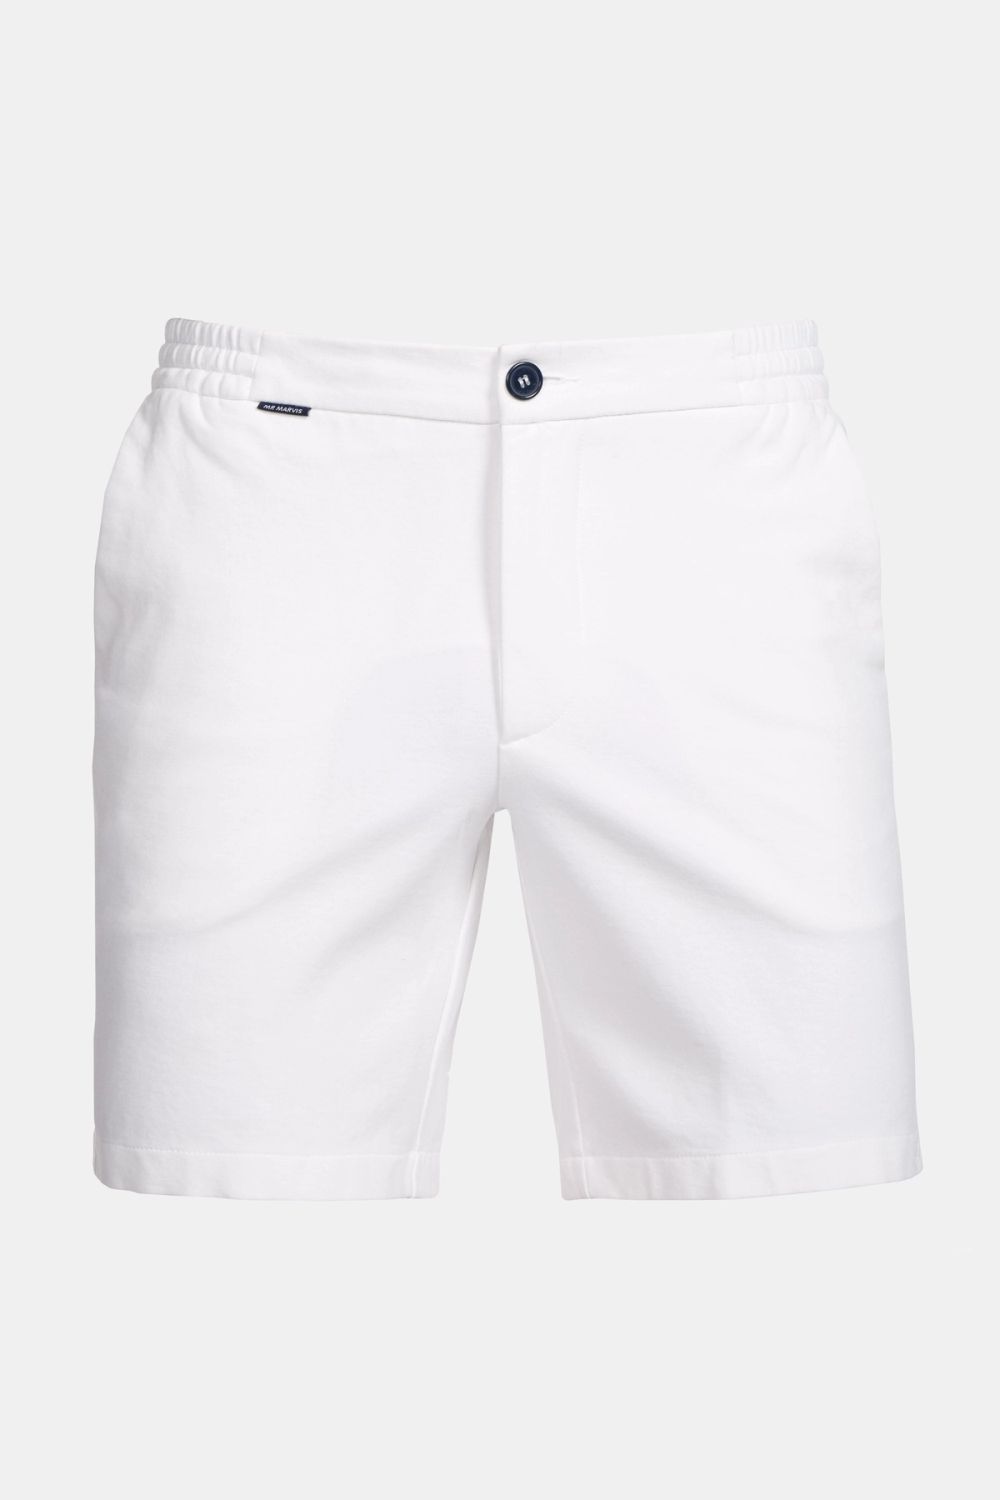 Wimbledons - Shorts Easies